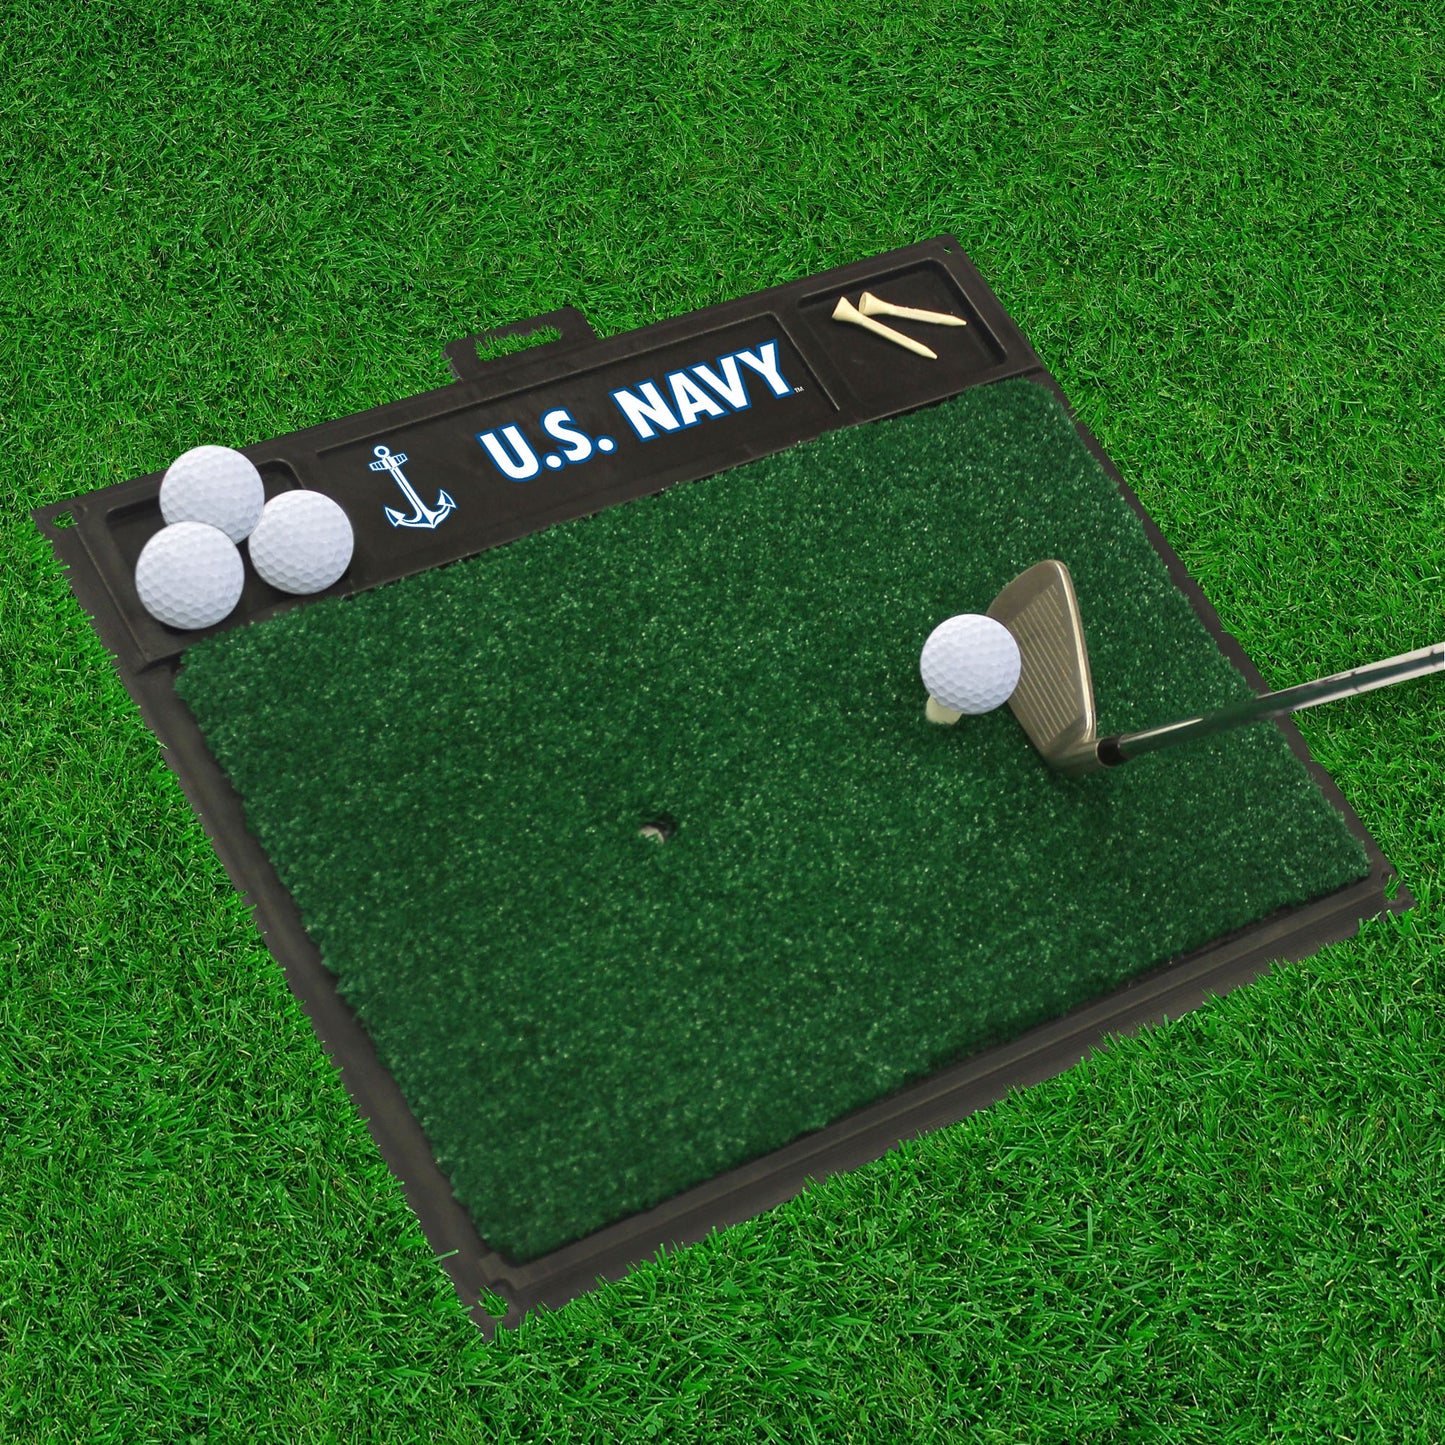 U.S. Navy  Golf Hitting Mat by Fanmats